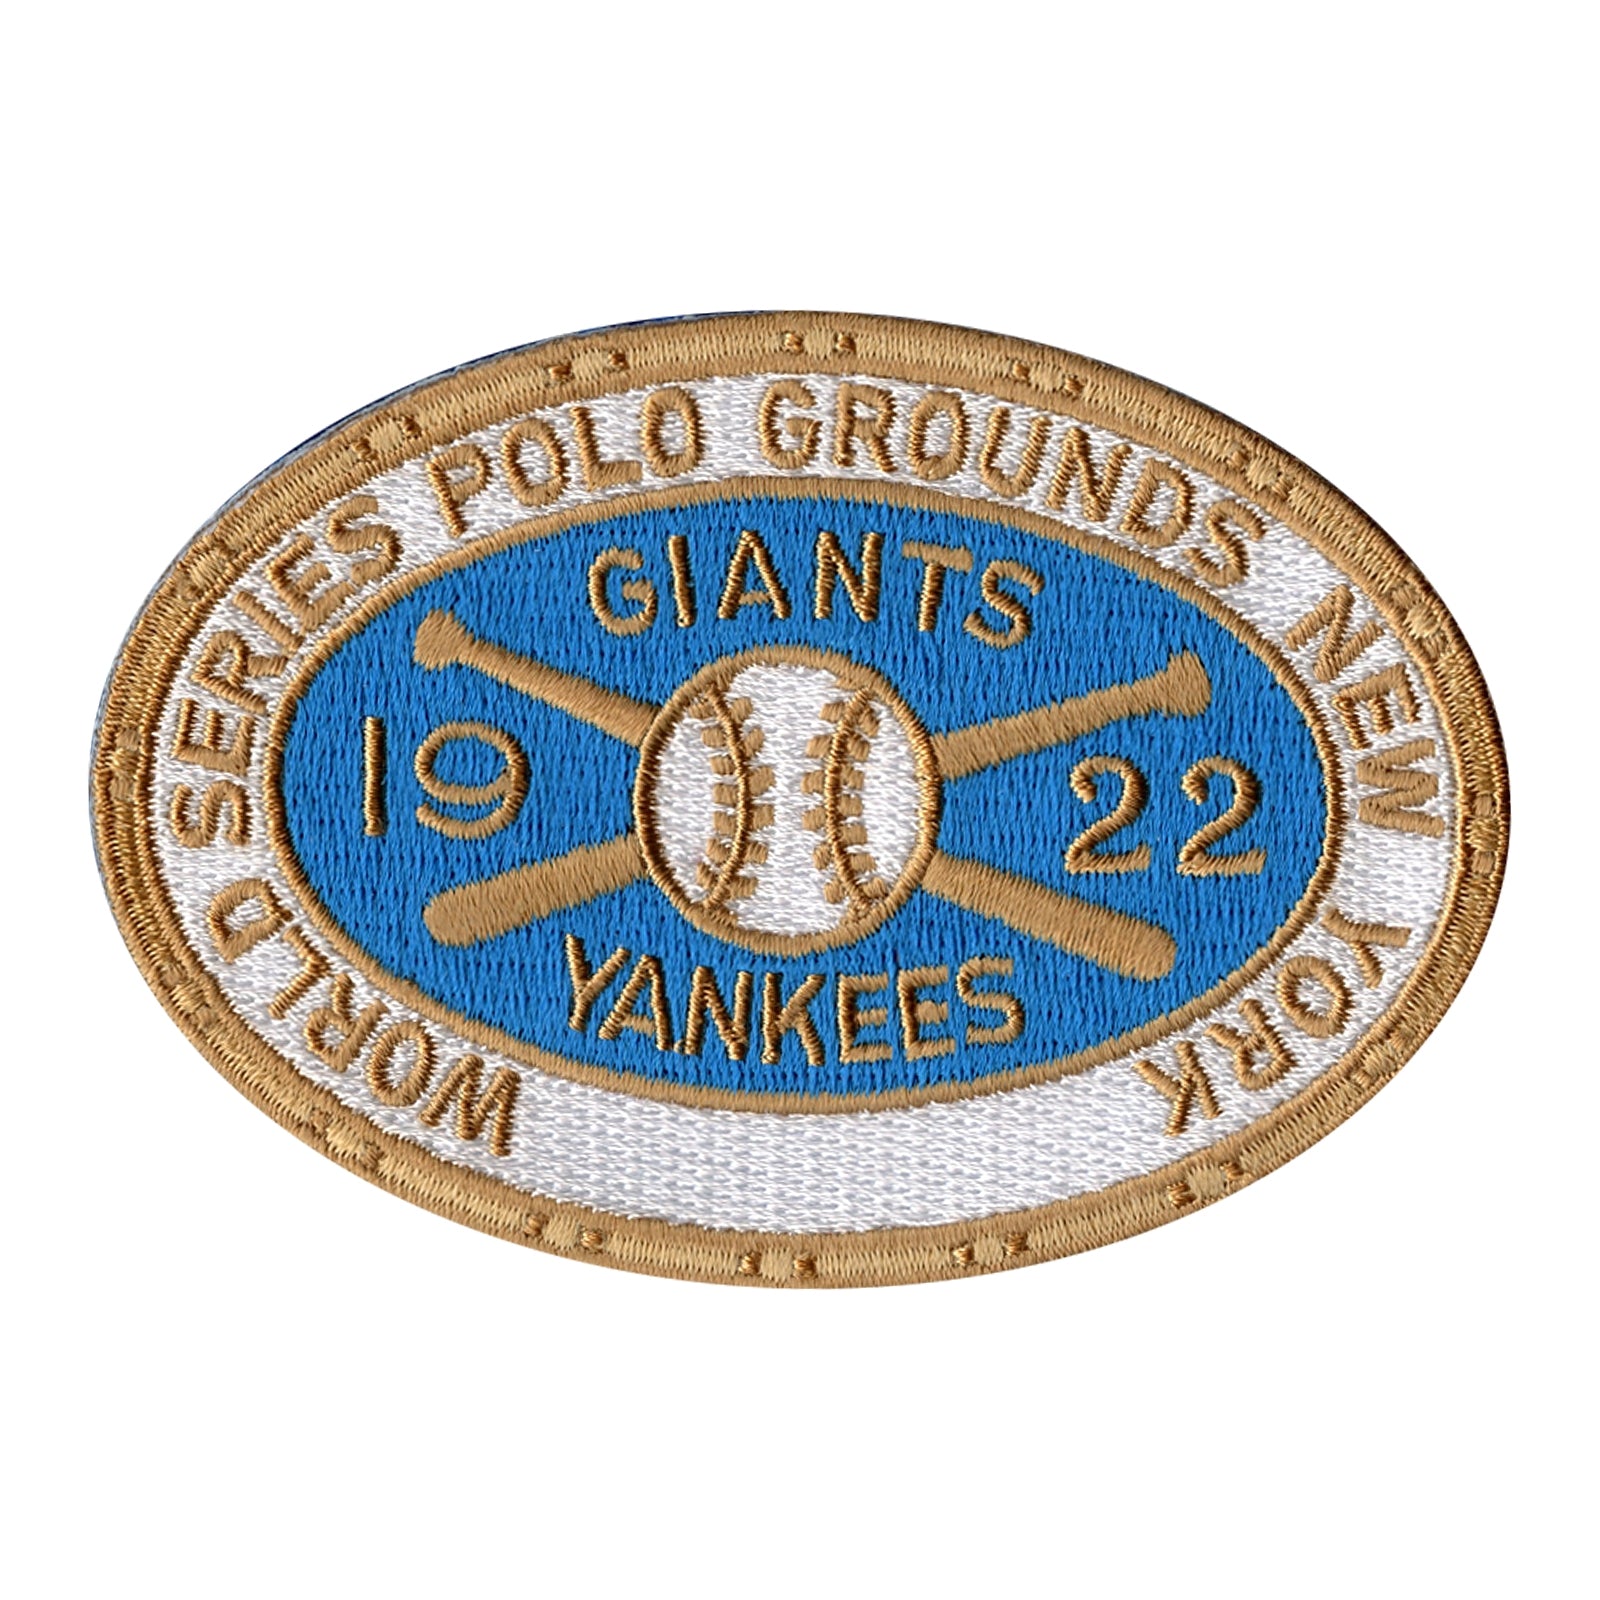 New York Giants vs. New York Yankees 4 x 4 1922 World Series Patch